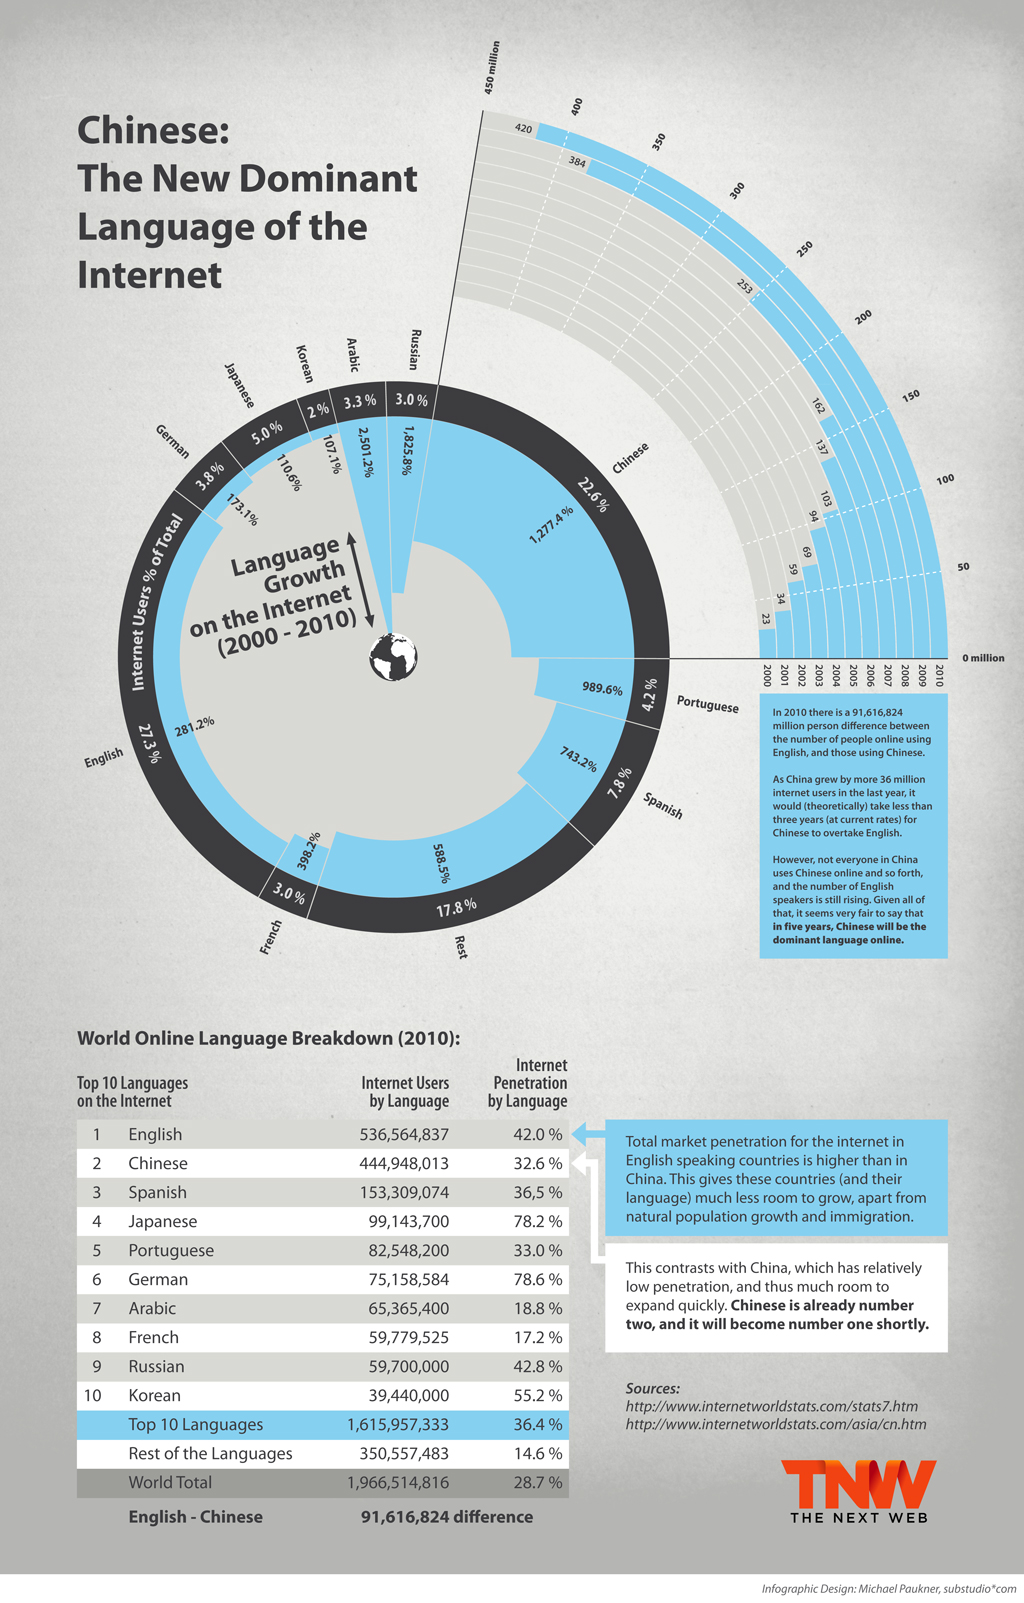 Languages on the internet infographic via & © TNW